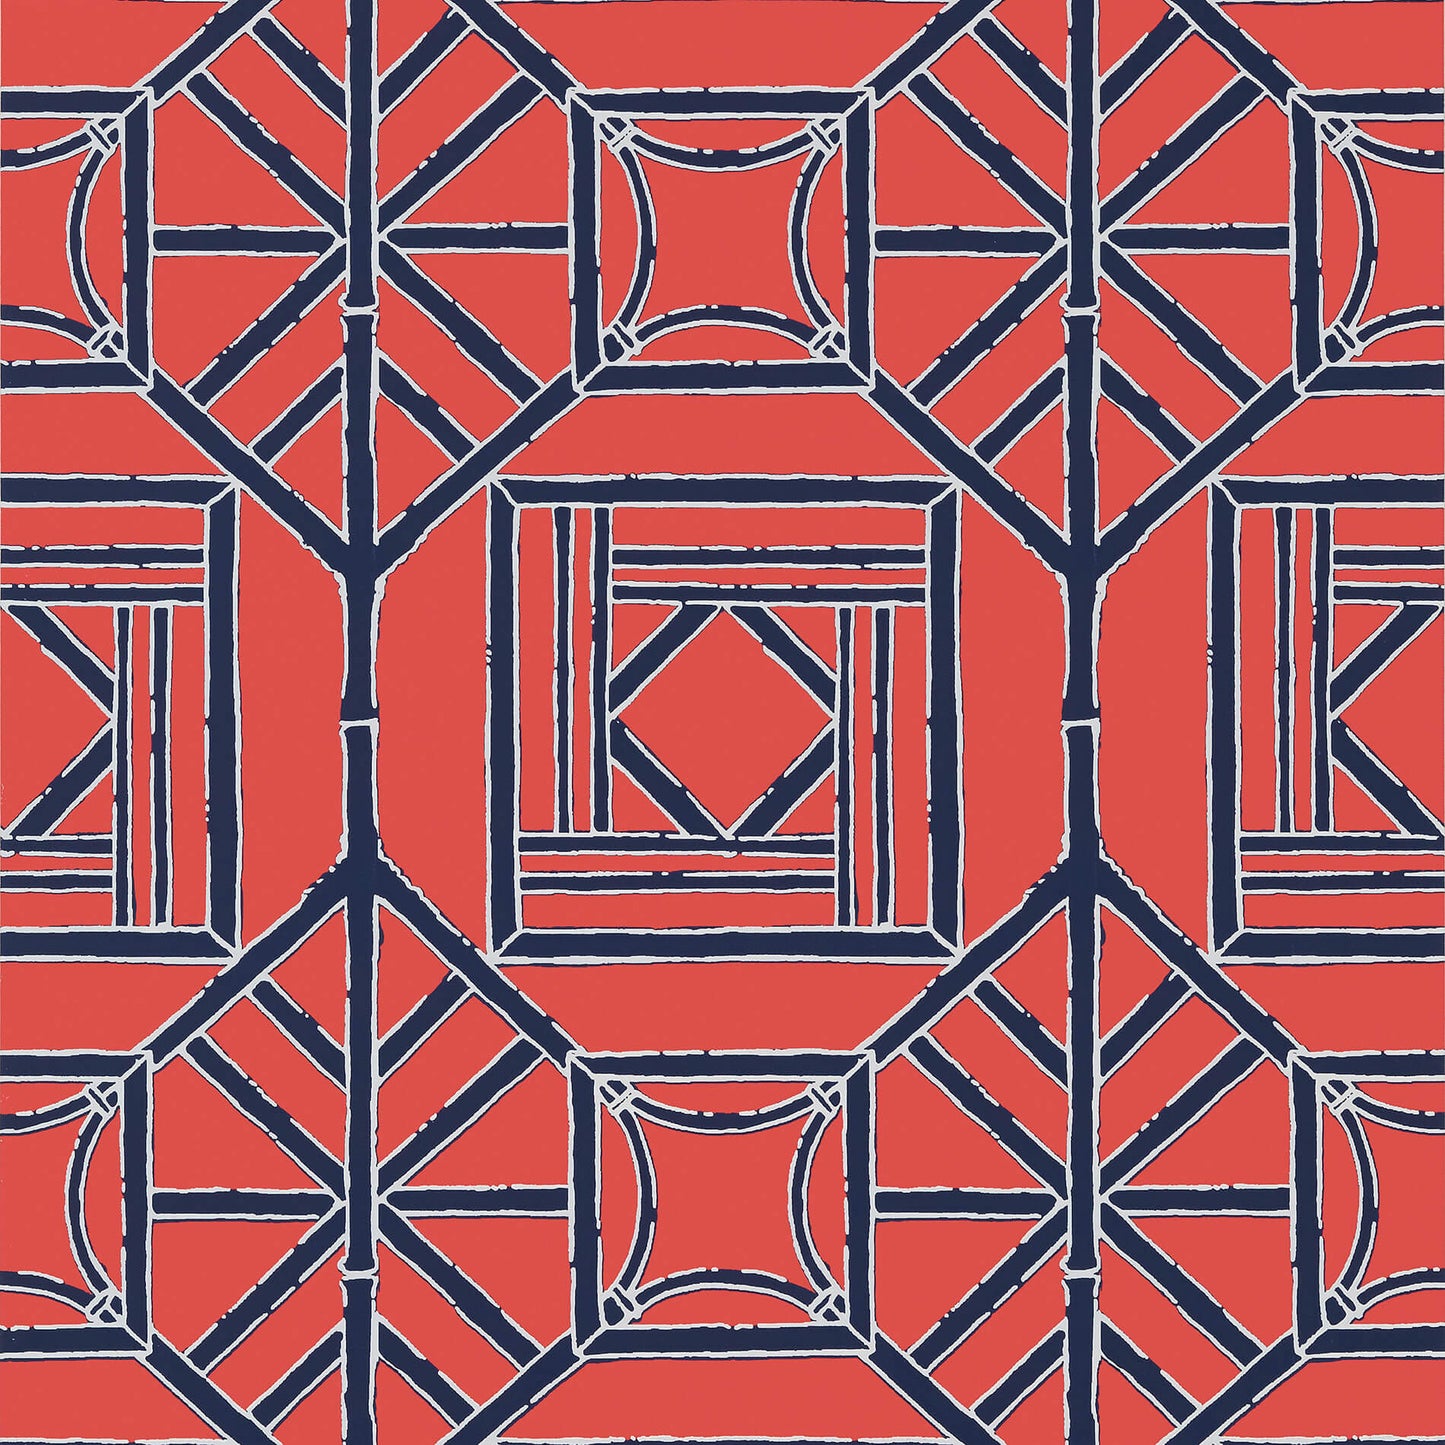 Thibaut Dynasty Shoji Panel Wallpaper - Red & Blue